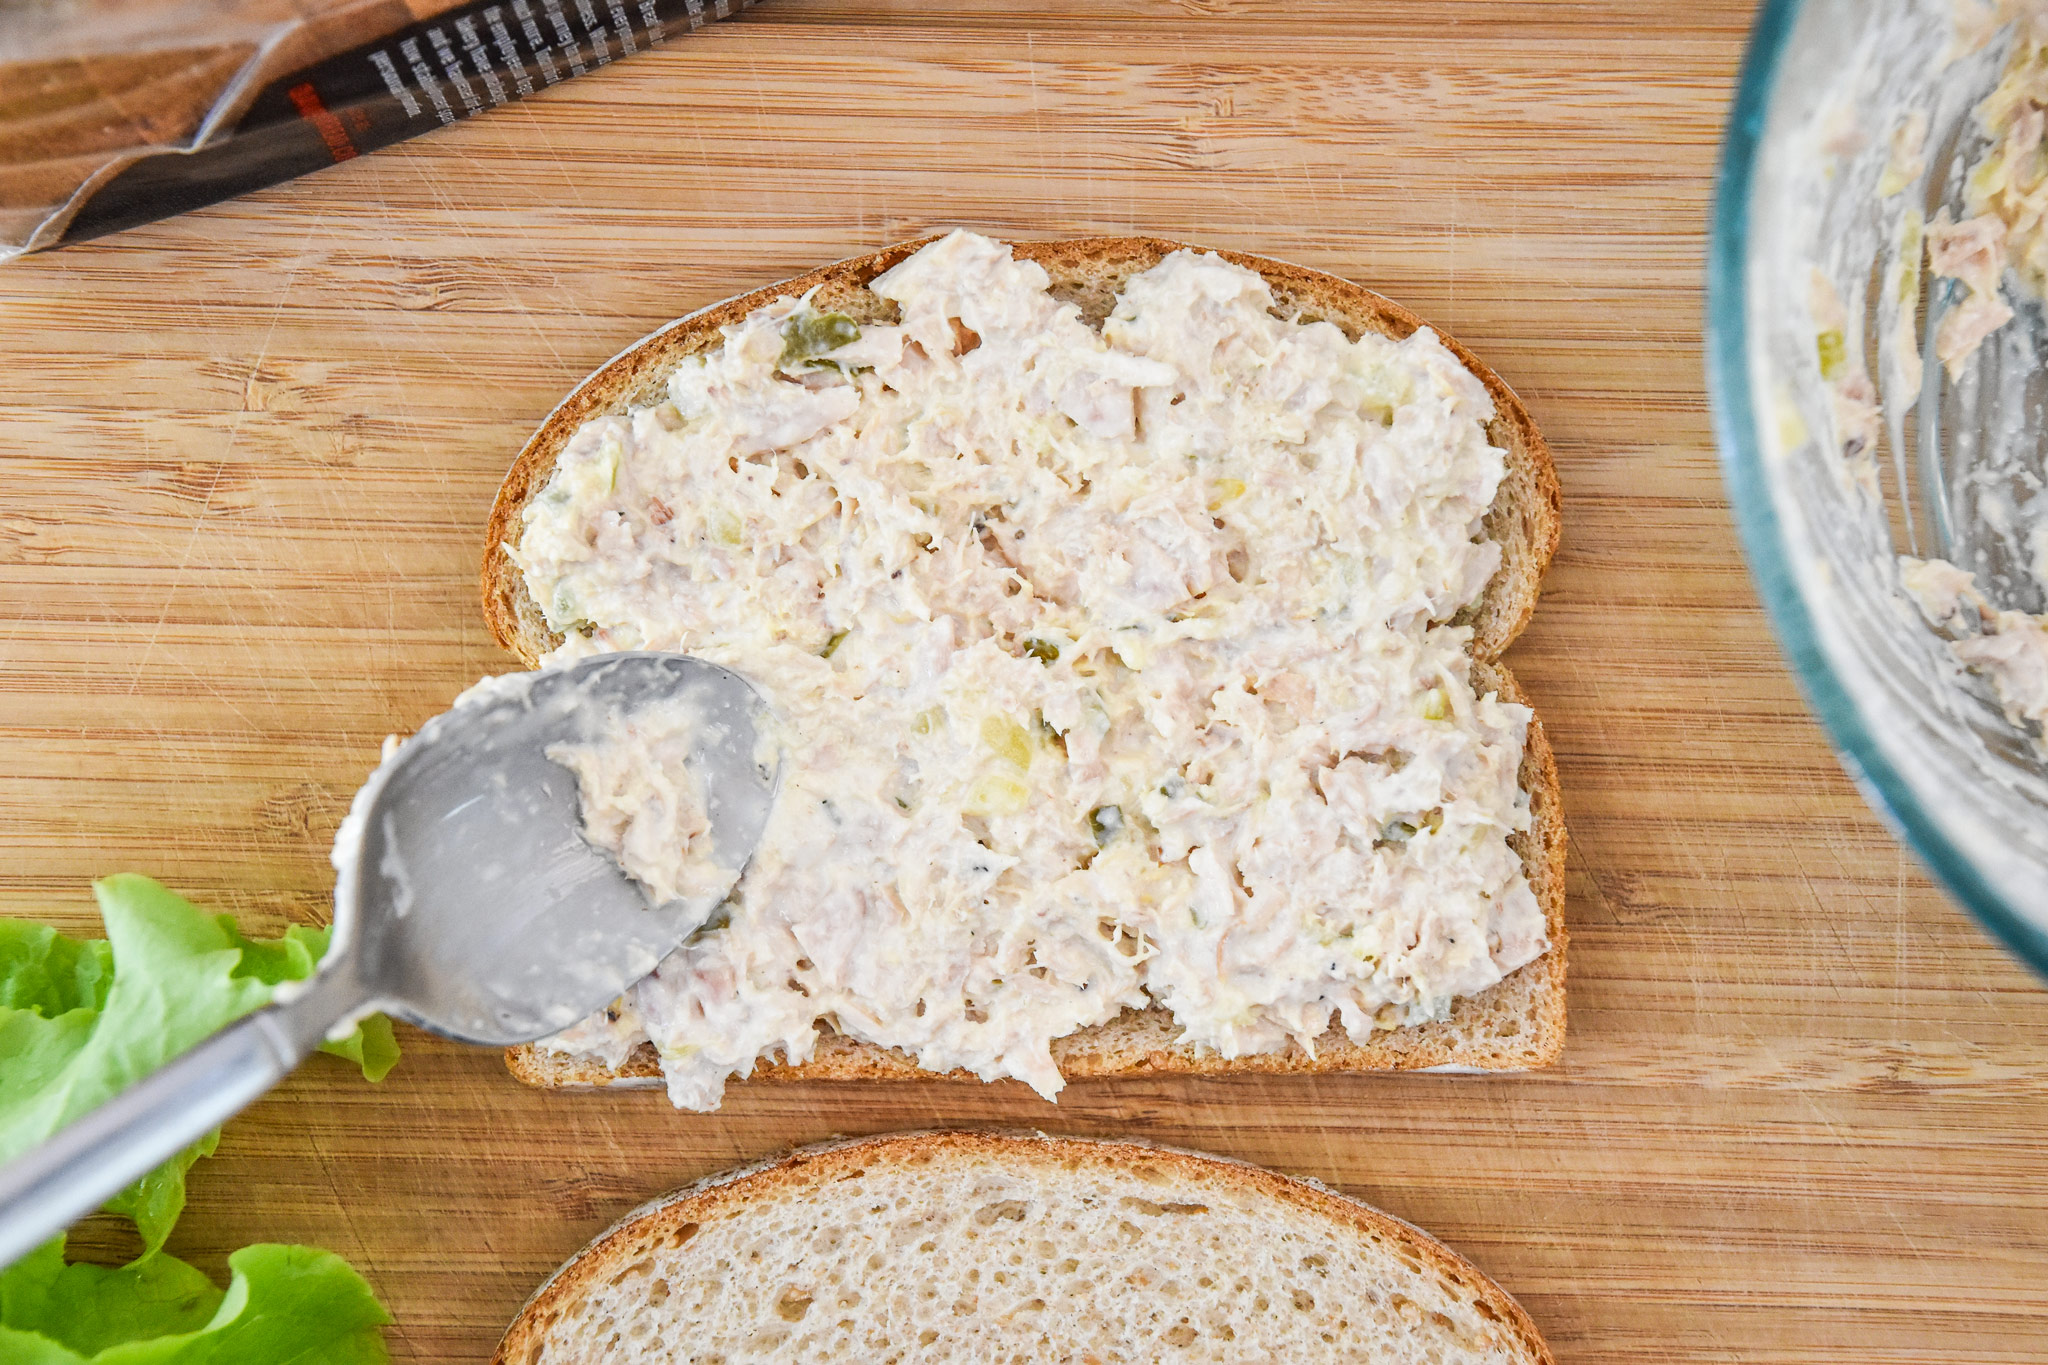 spreading the tuna salad on bread.